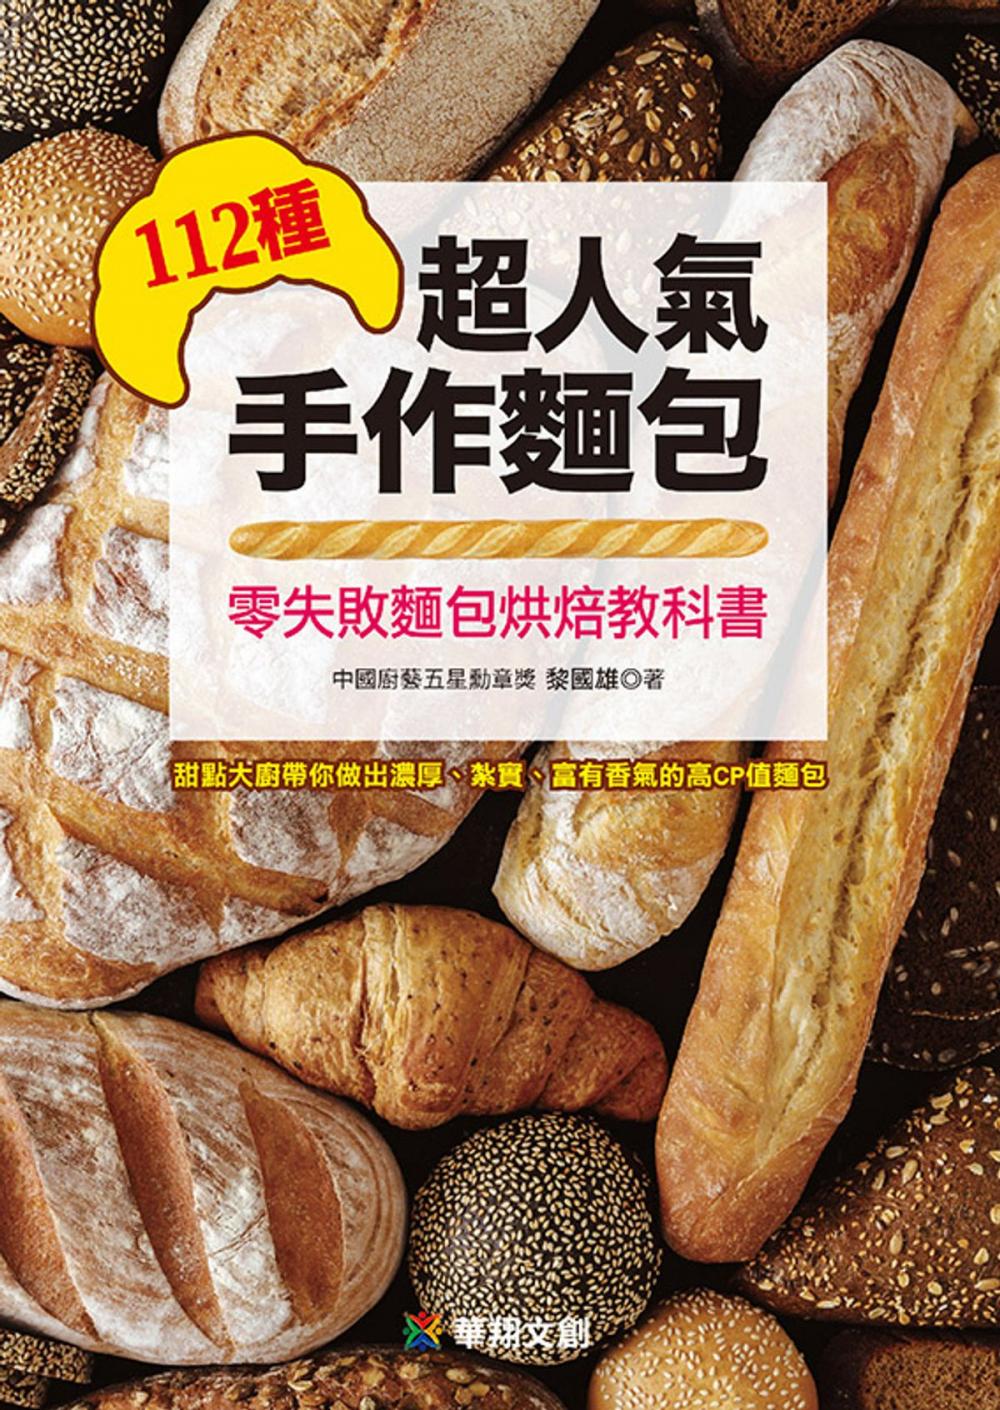 Big bigCover of 112種超人氣手作麵包